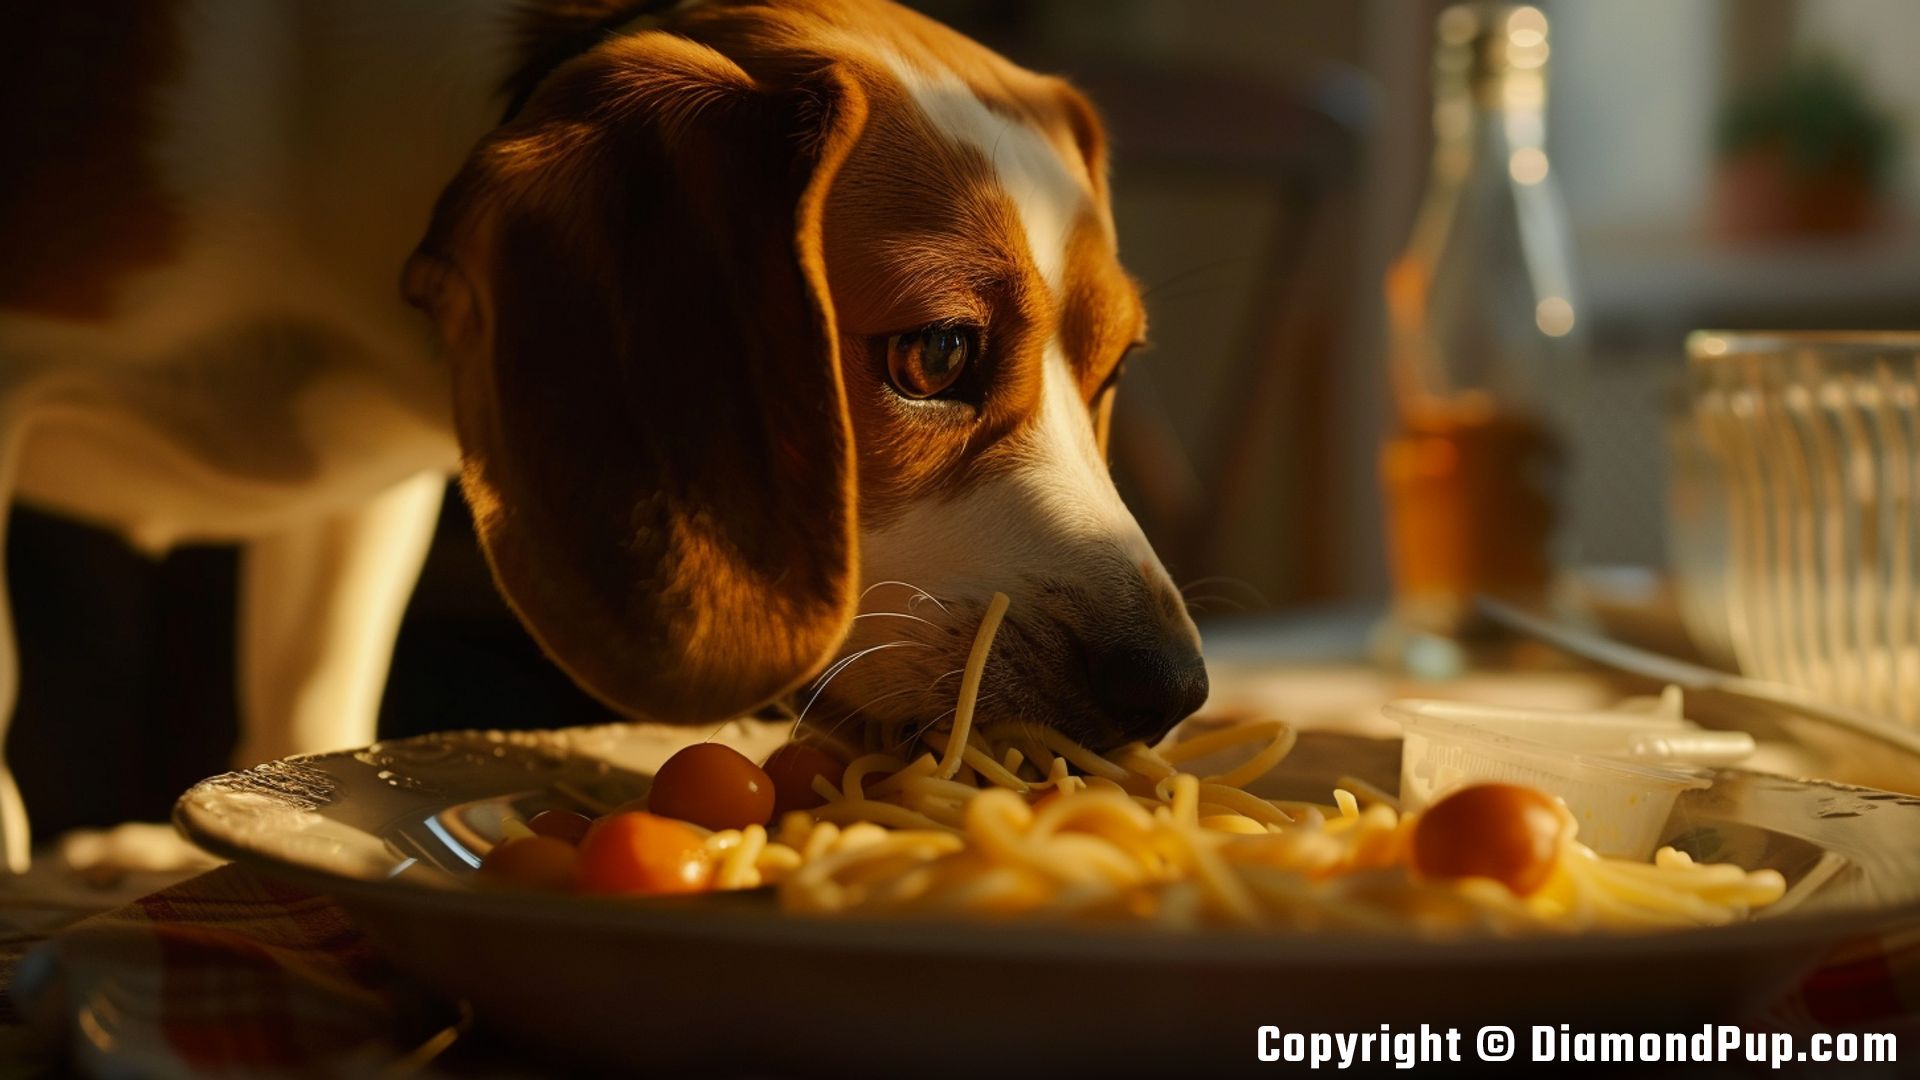 Photo of a Cute Beagle Eating Pasta